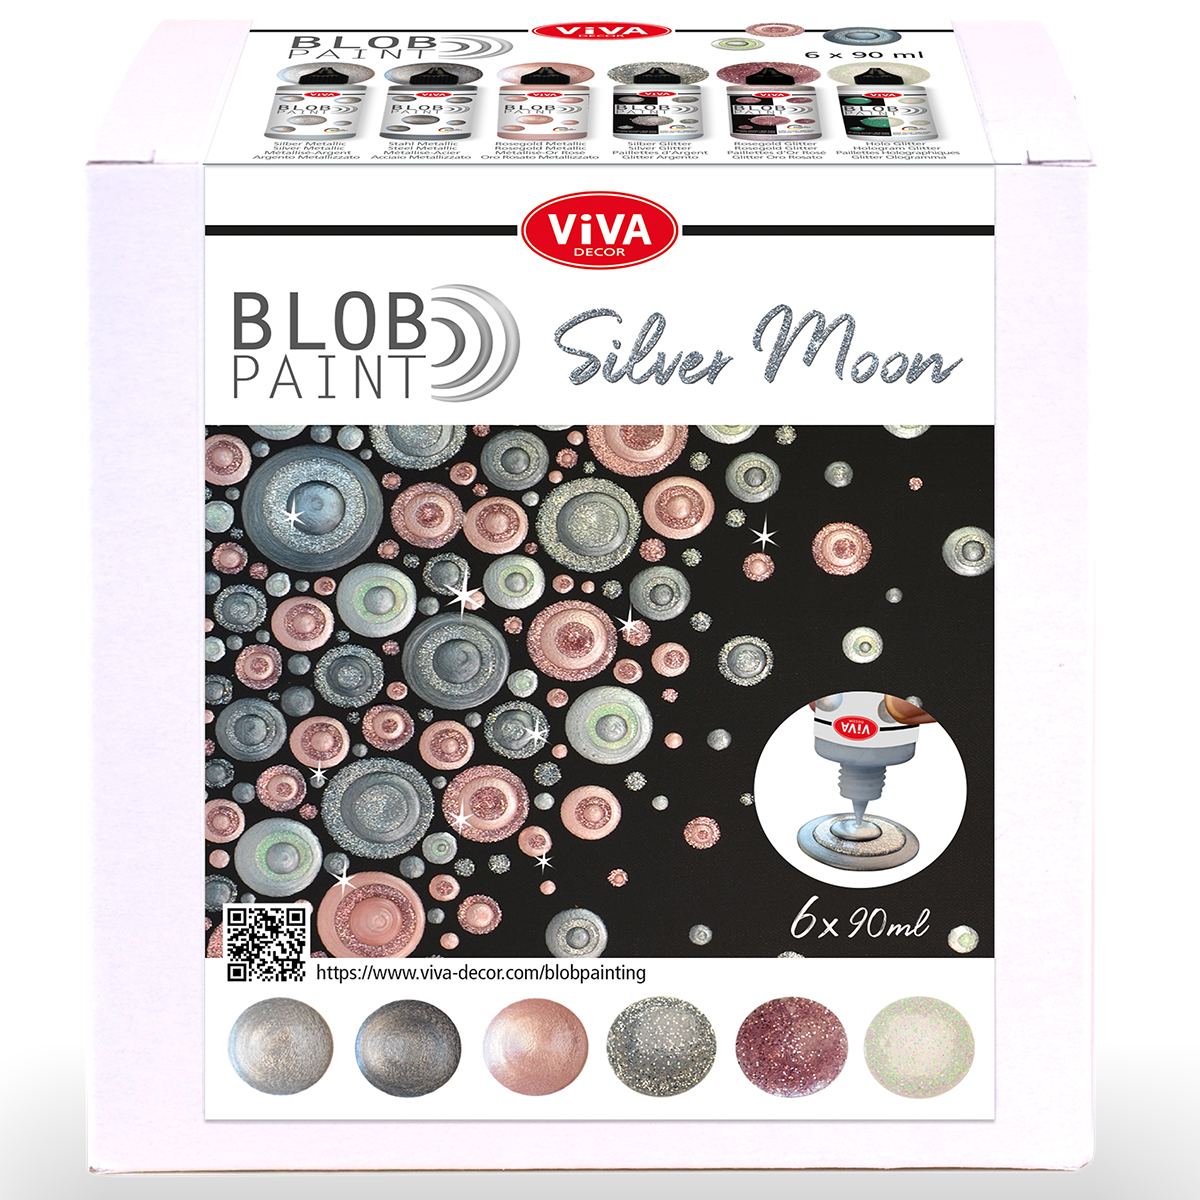 Blob Paint Set Silver Moon, 6 x 90ml